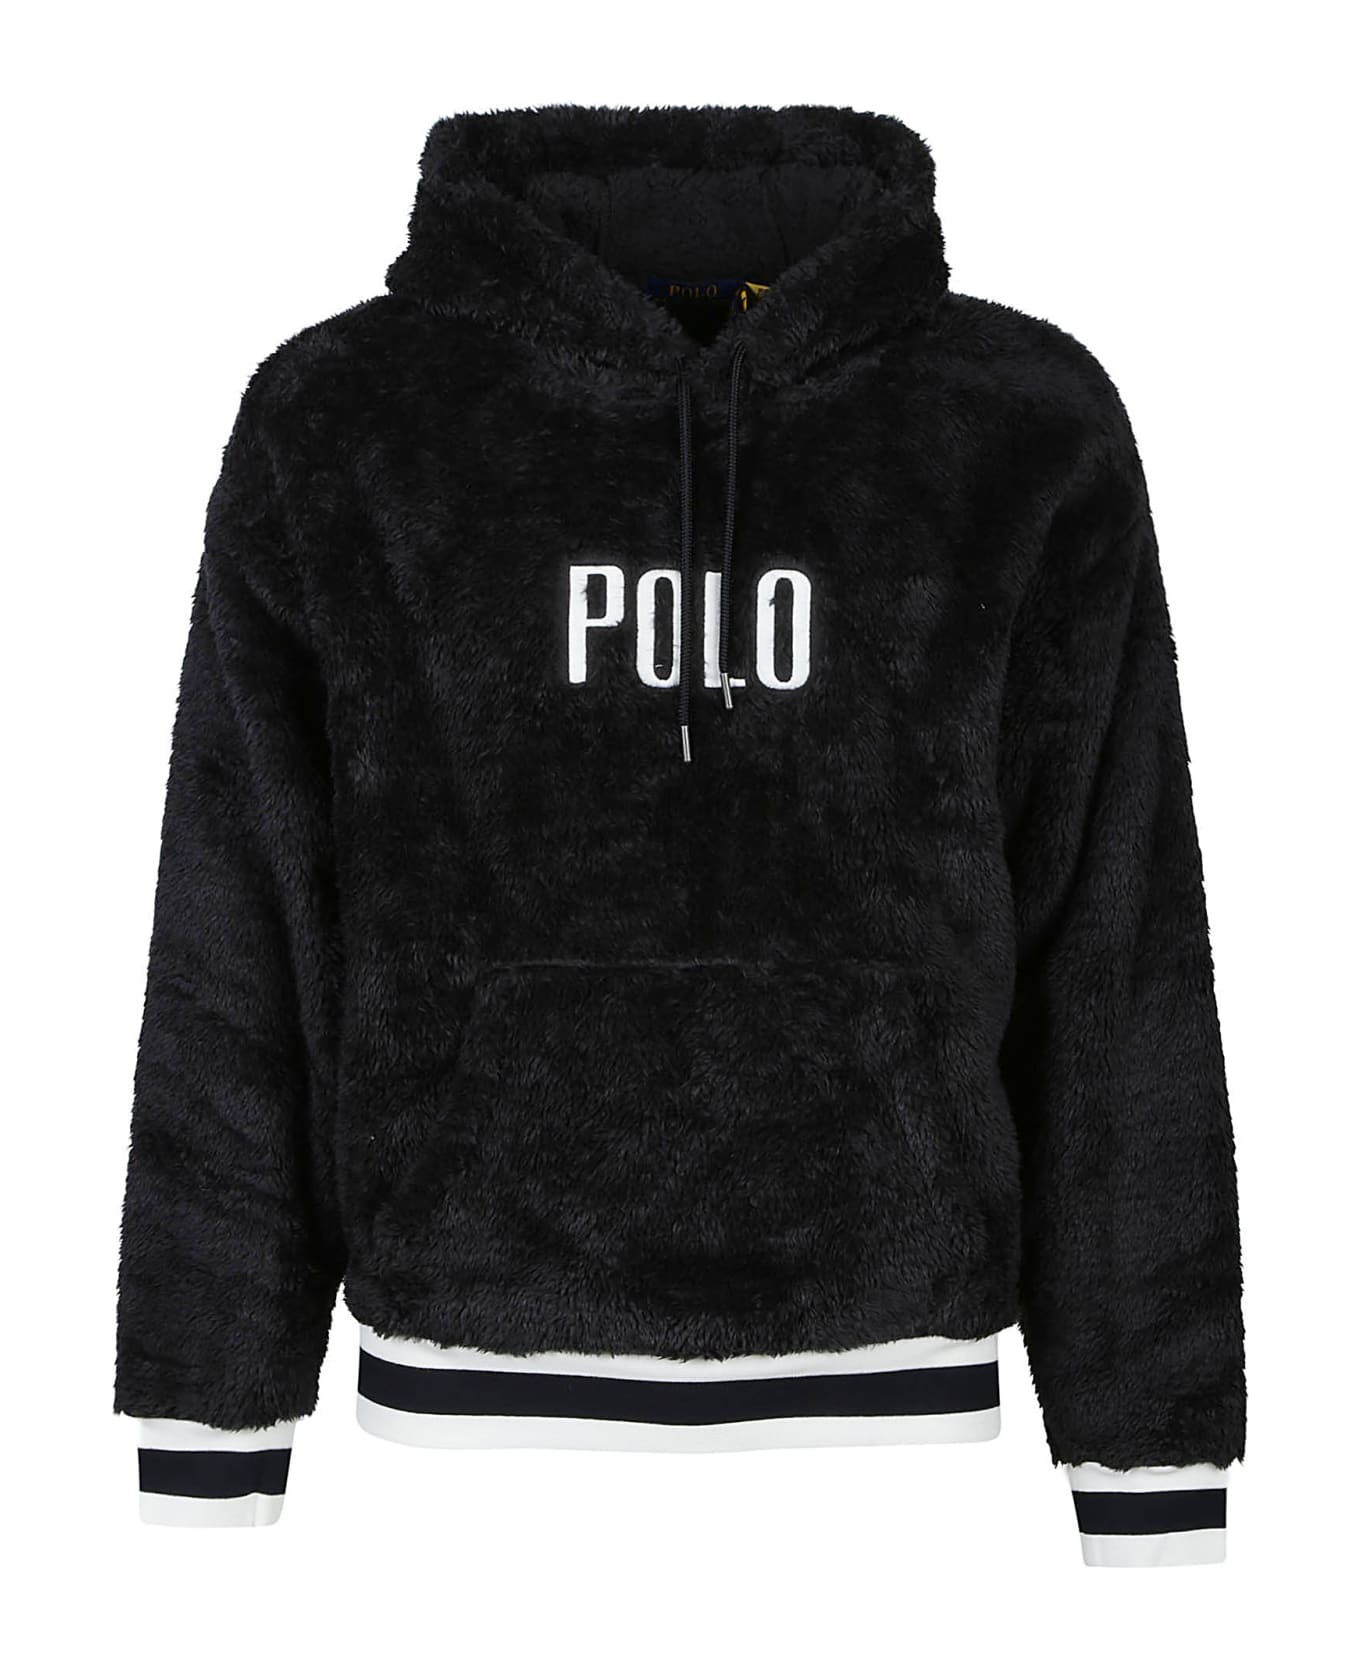 Polo Ralph Lauren Long Sleeve Sweatshirt - Polo Black